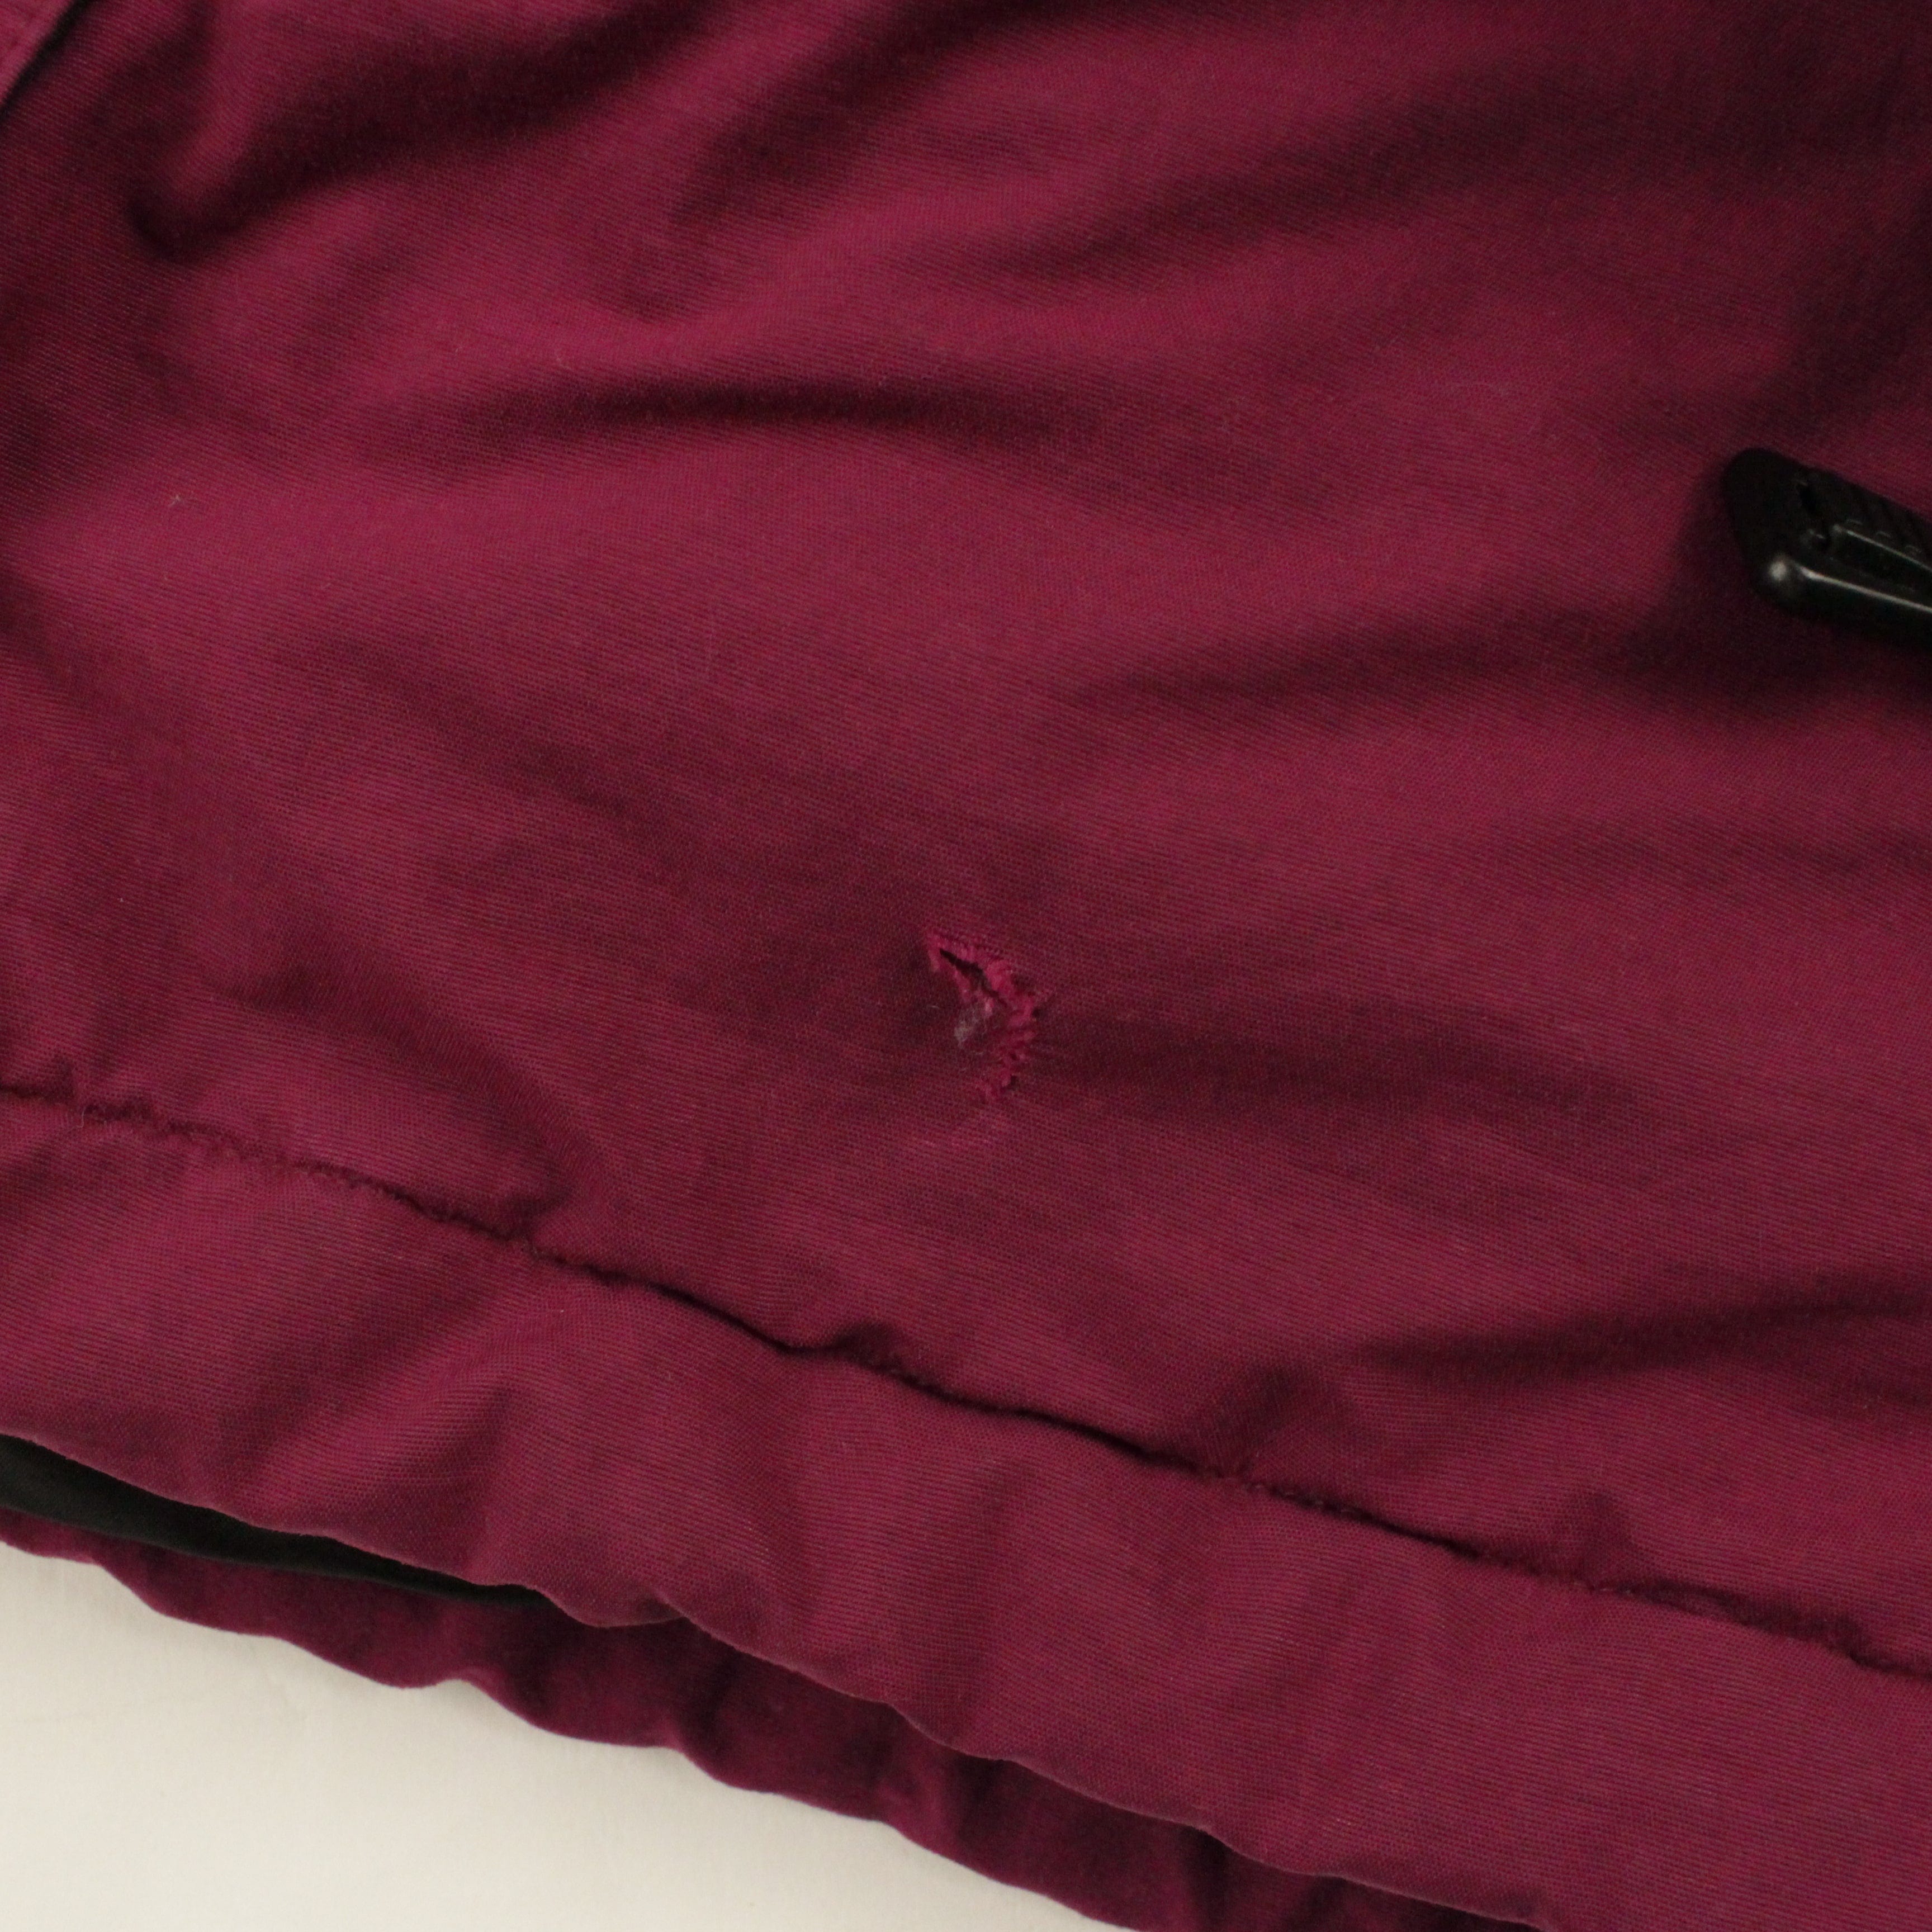 L.L. Bean, Jackets & Coats, Ll Bean Womens Purple Fleece Vest Size Large  Regular